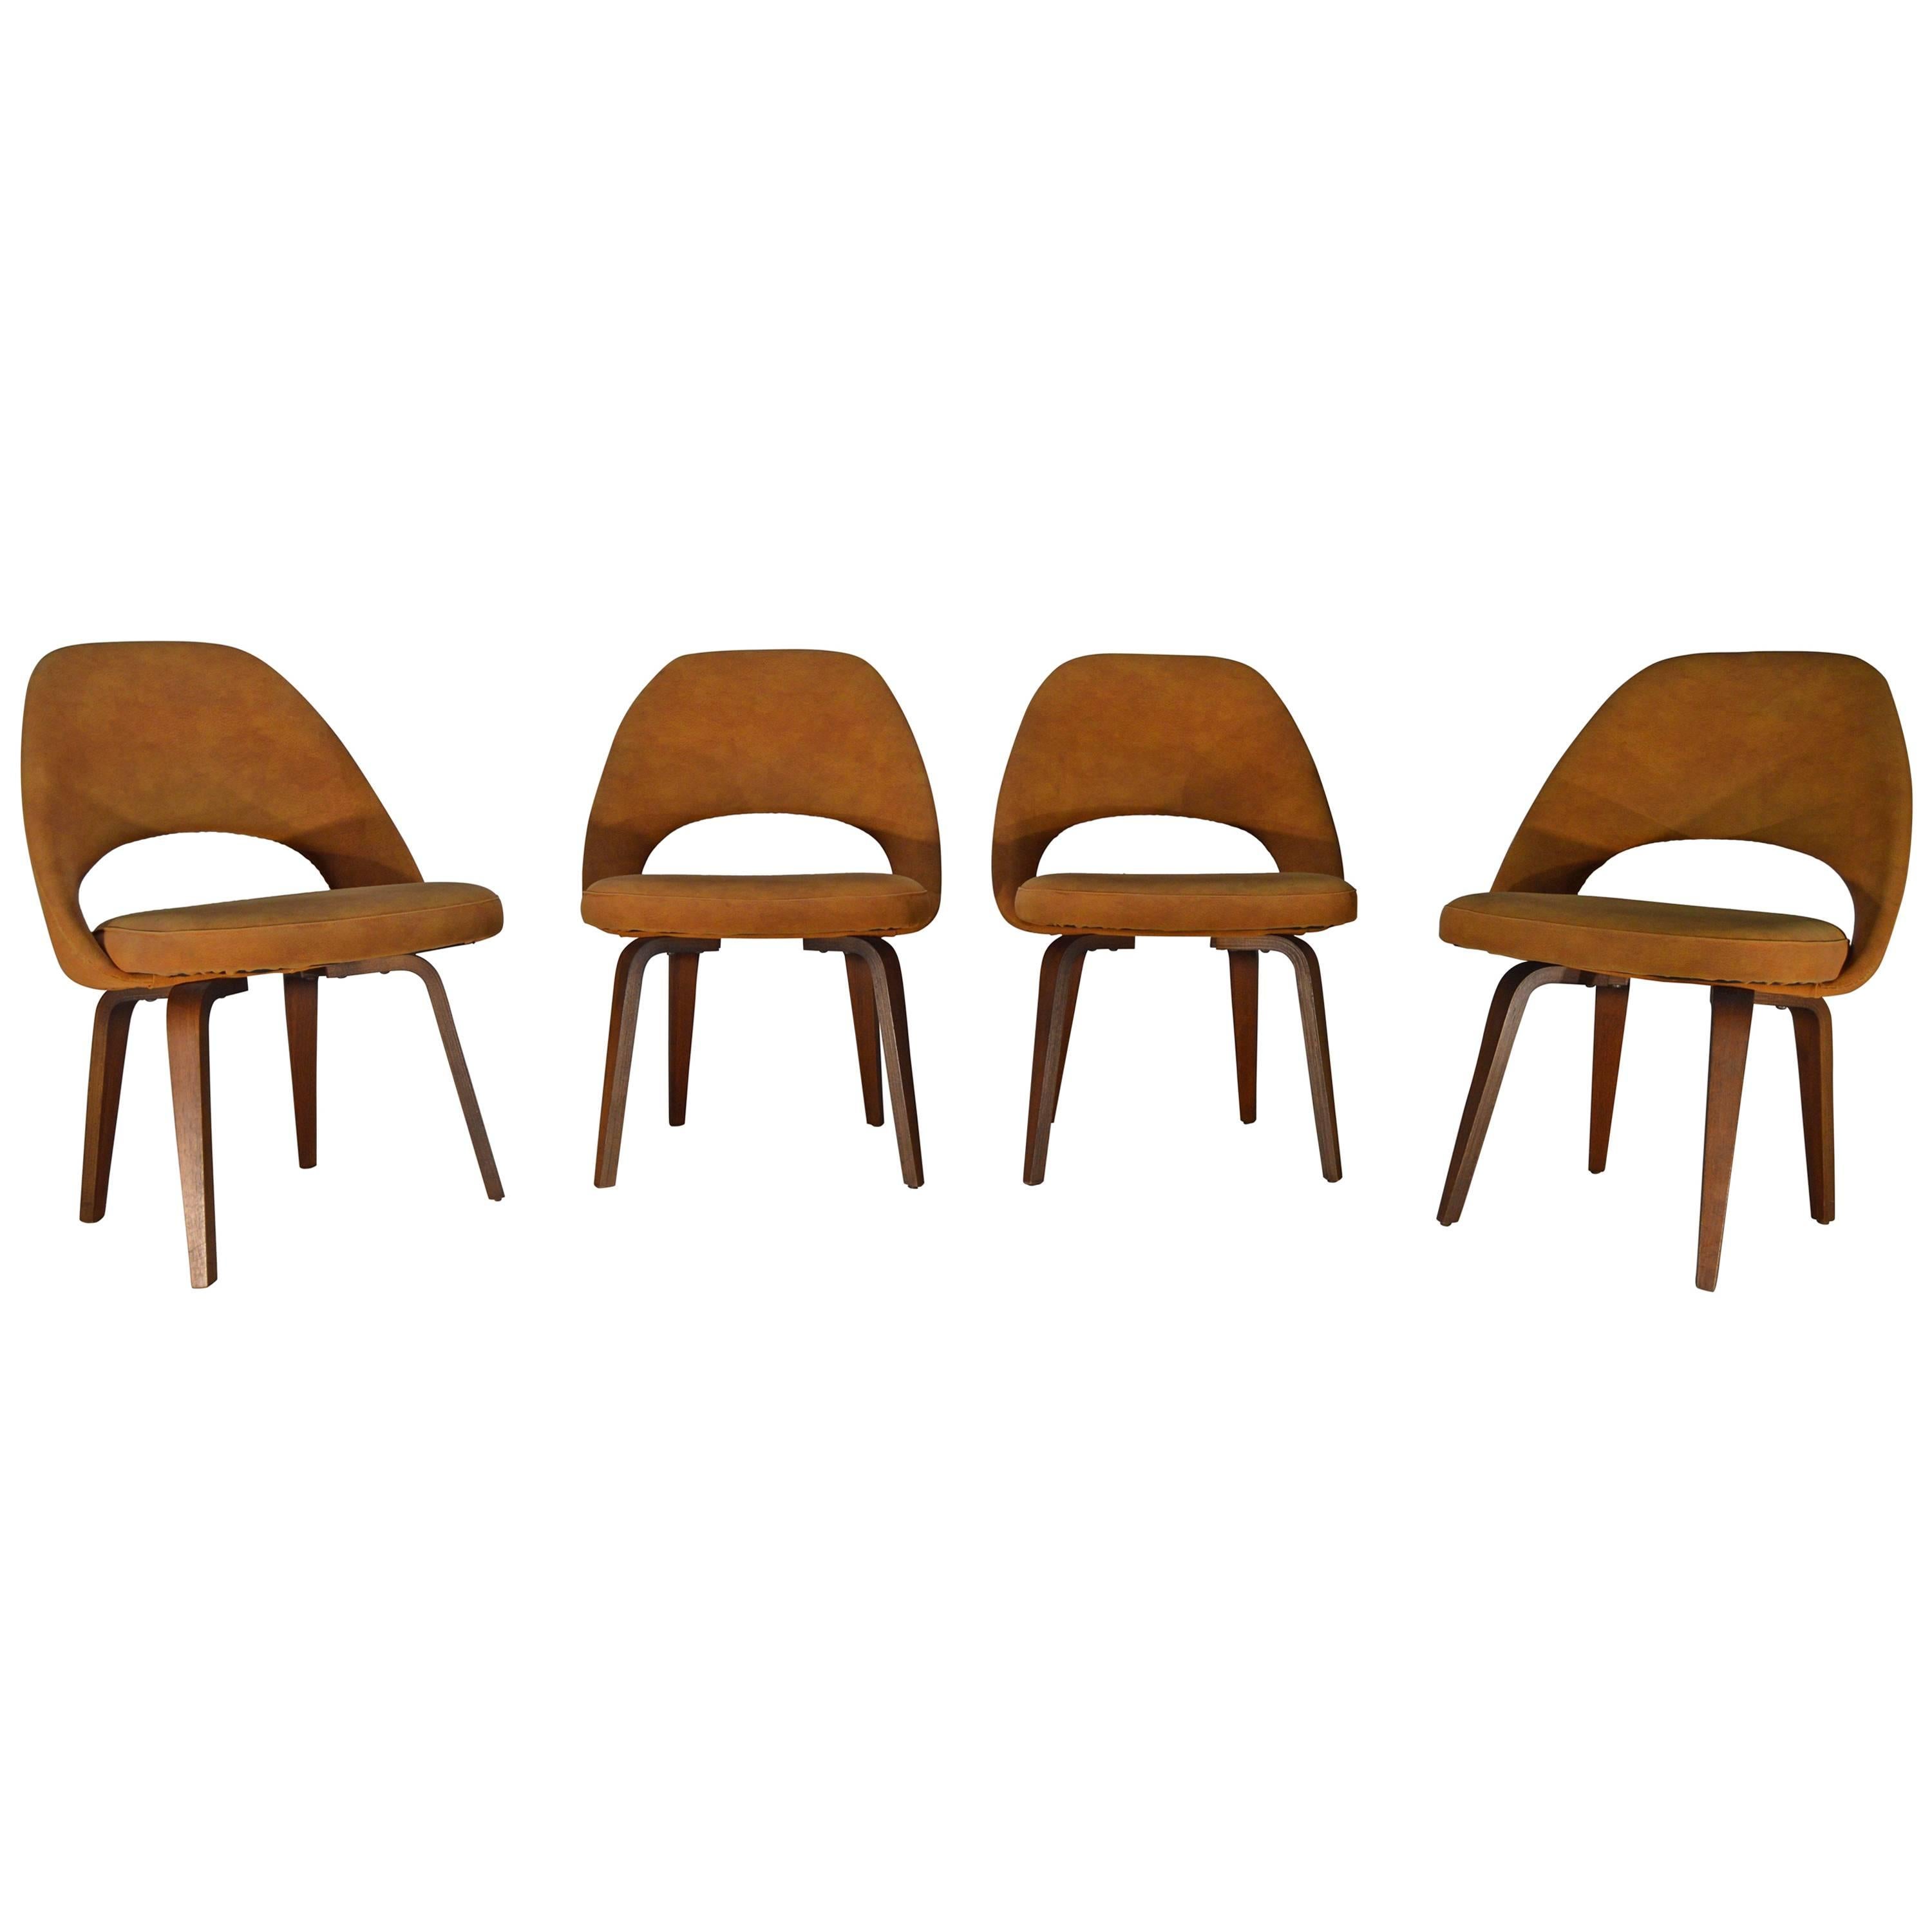 Four Eero Saarinen for Knoll Bentwood Side Chairs